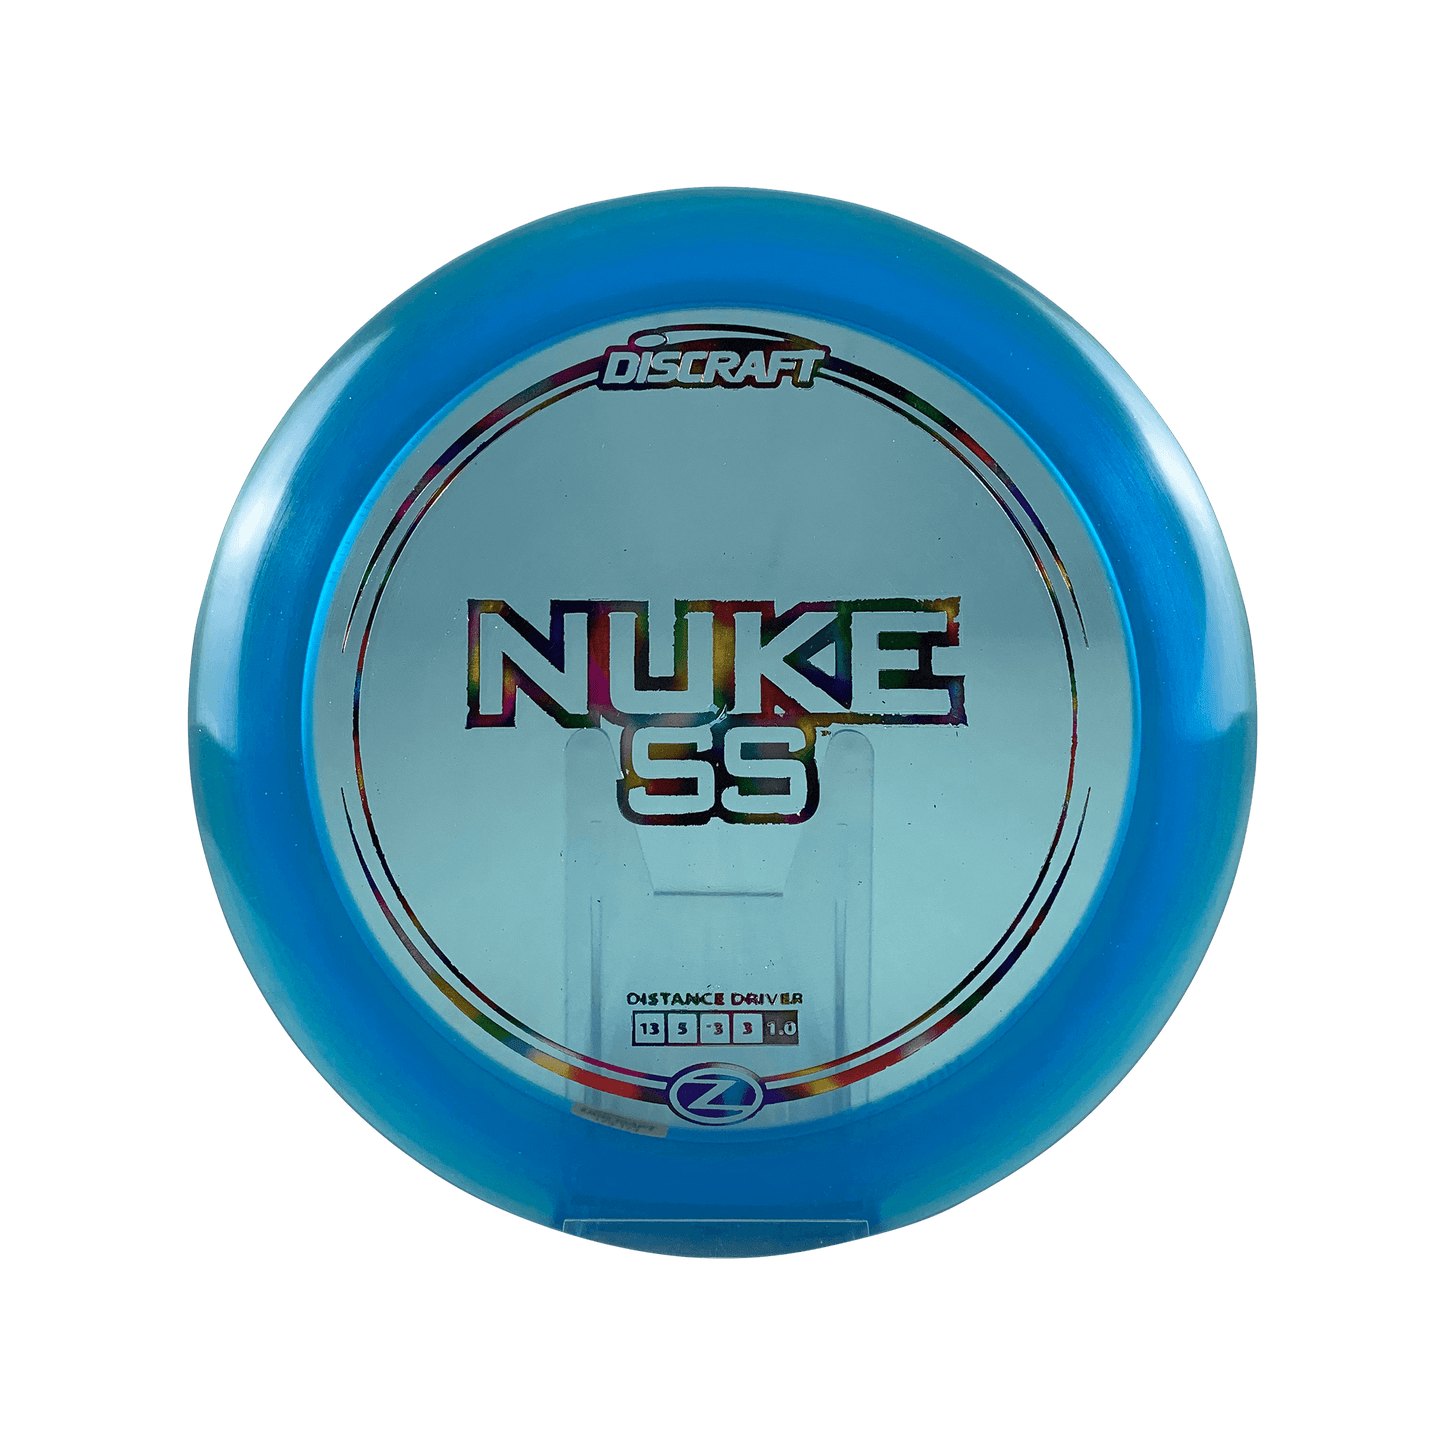 Z Nuke SS Disc Discraft blue 173 